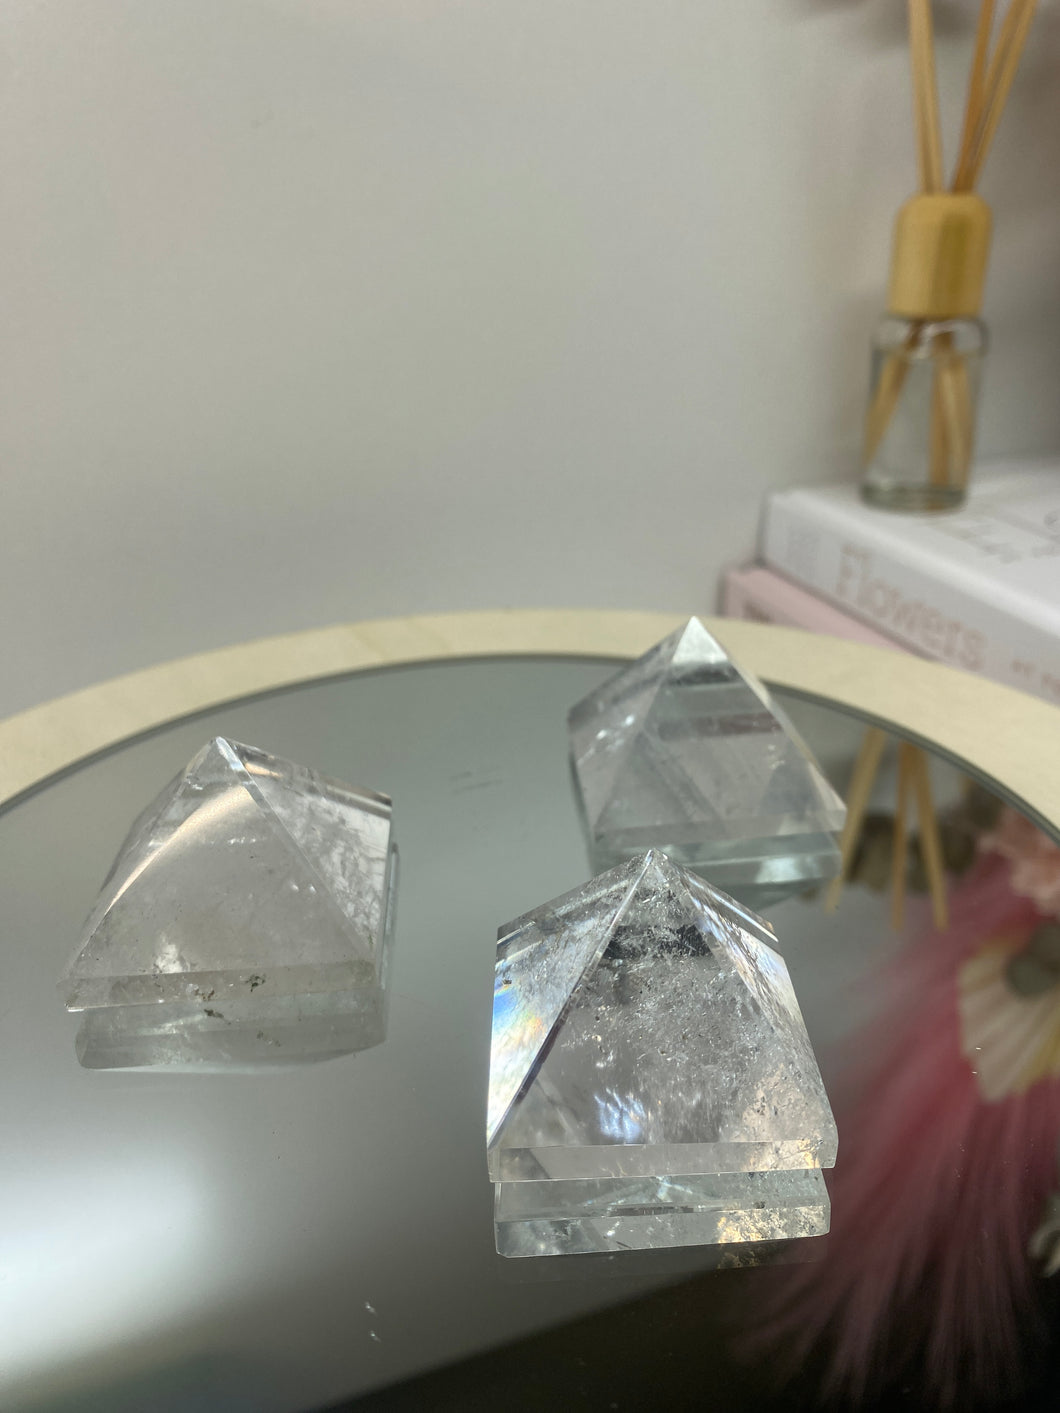 Clear Quartz pyramids - paper weight or unique display piece